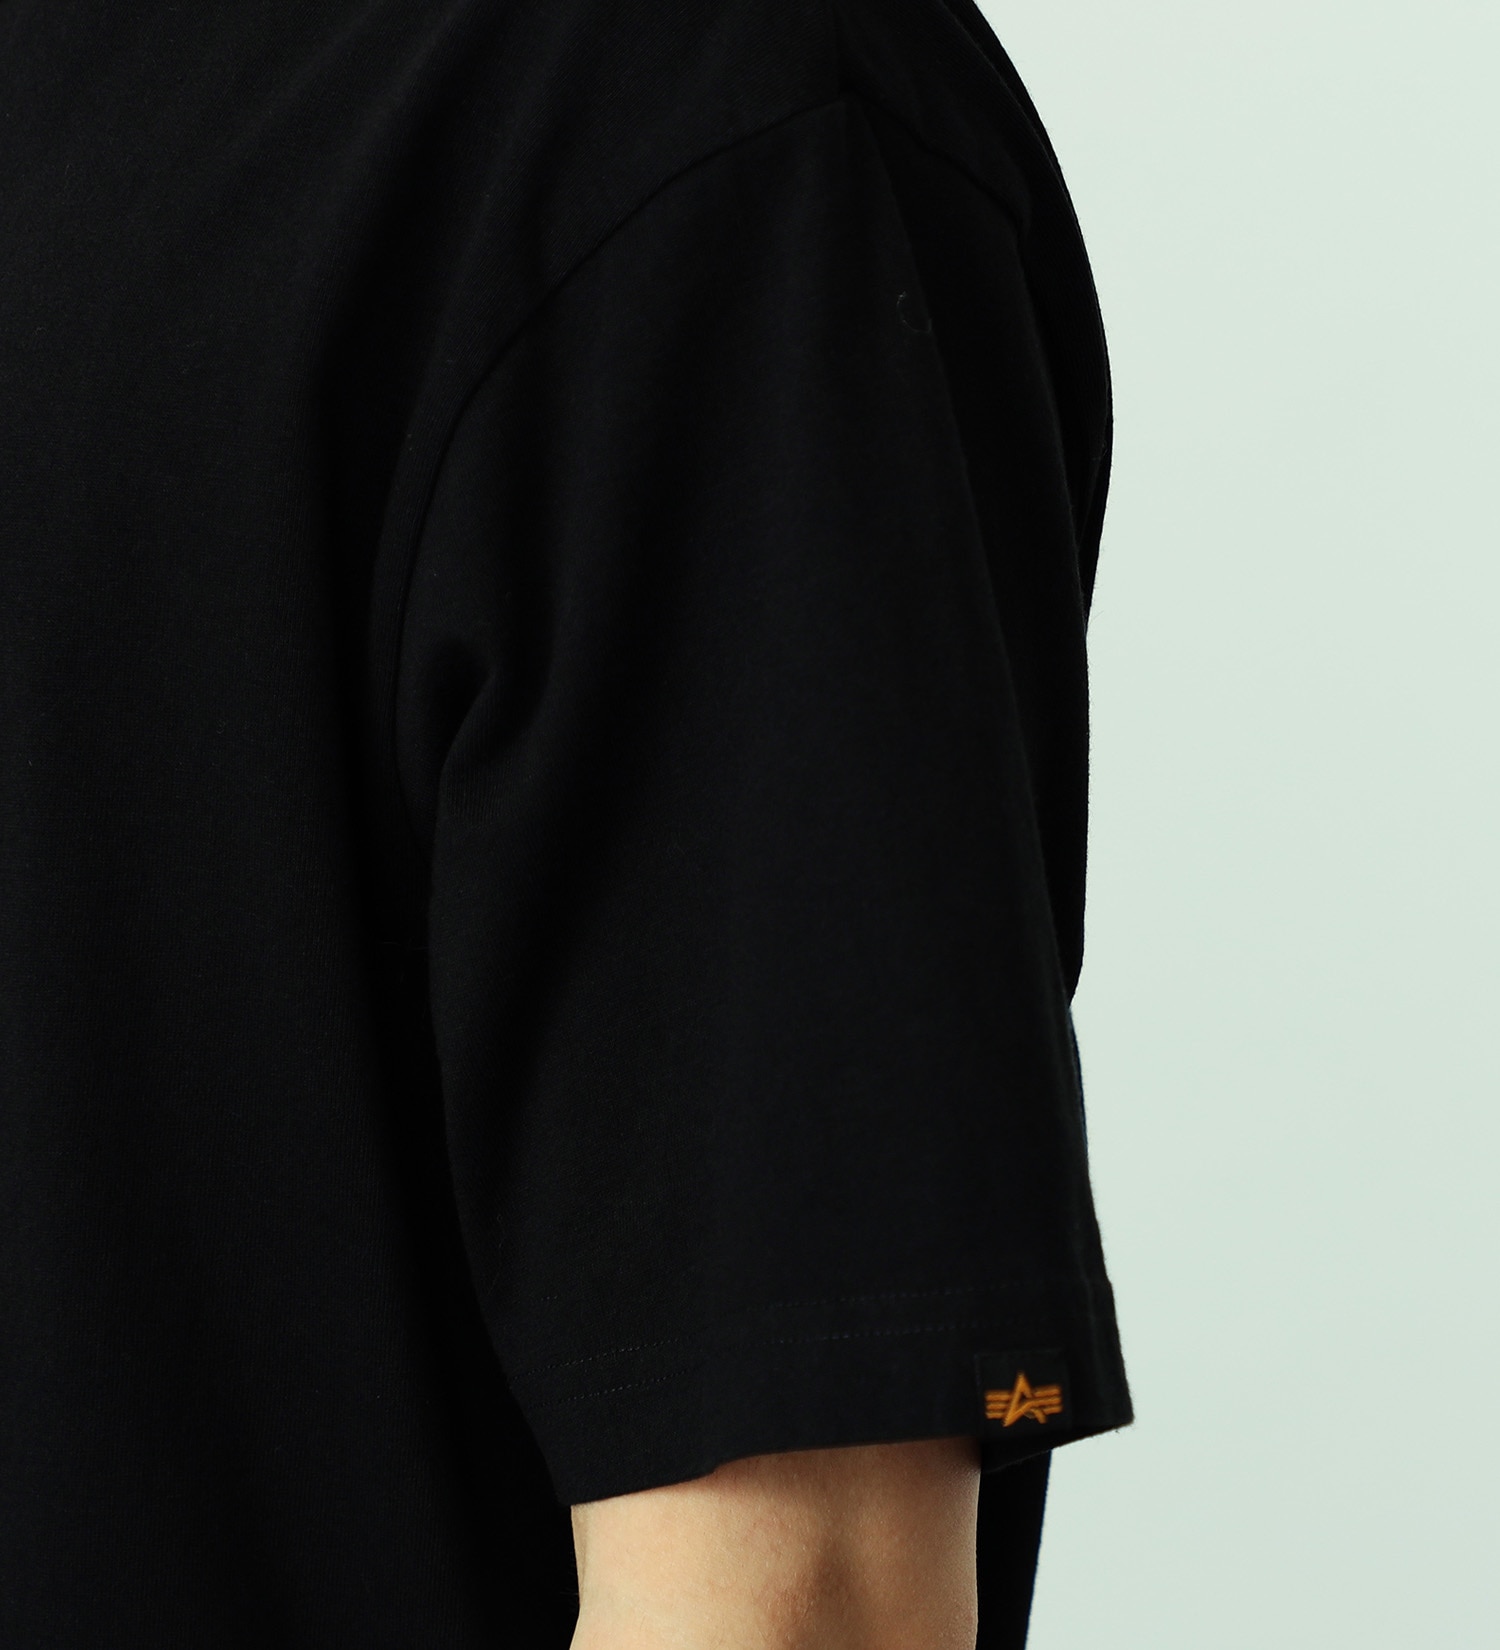 ALPHA(アルファ)の【大きいサイズ】AマークロゴプリントTシャツ 半袖 (グリーンフロッグスキンカモ)|トップス/Tシャツ/カットソー/メンズ|ブラック